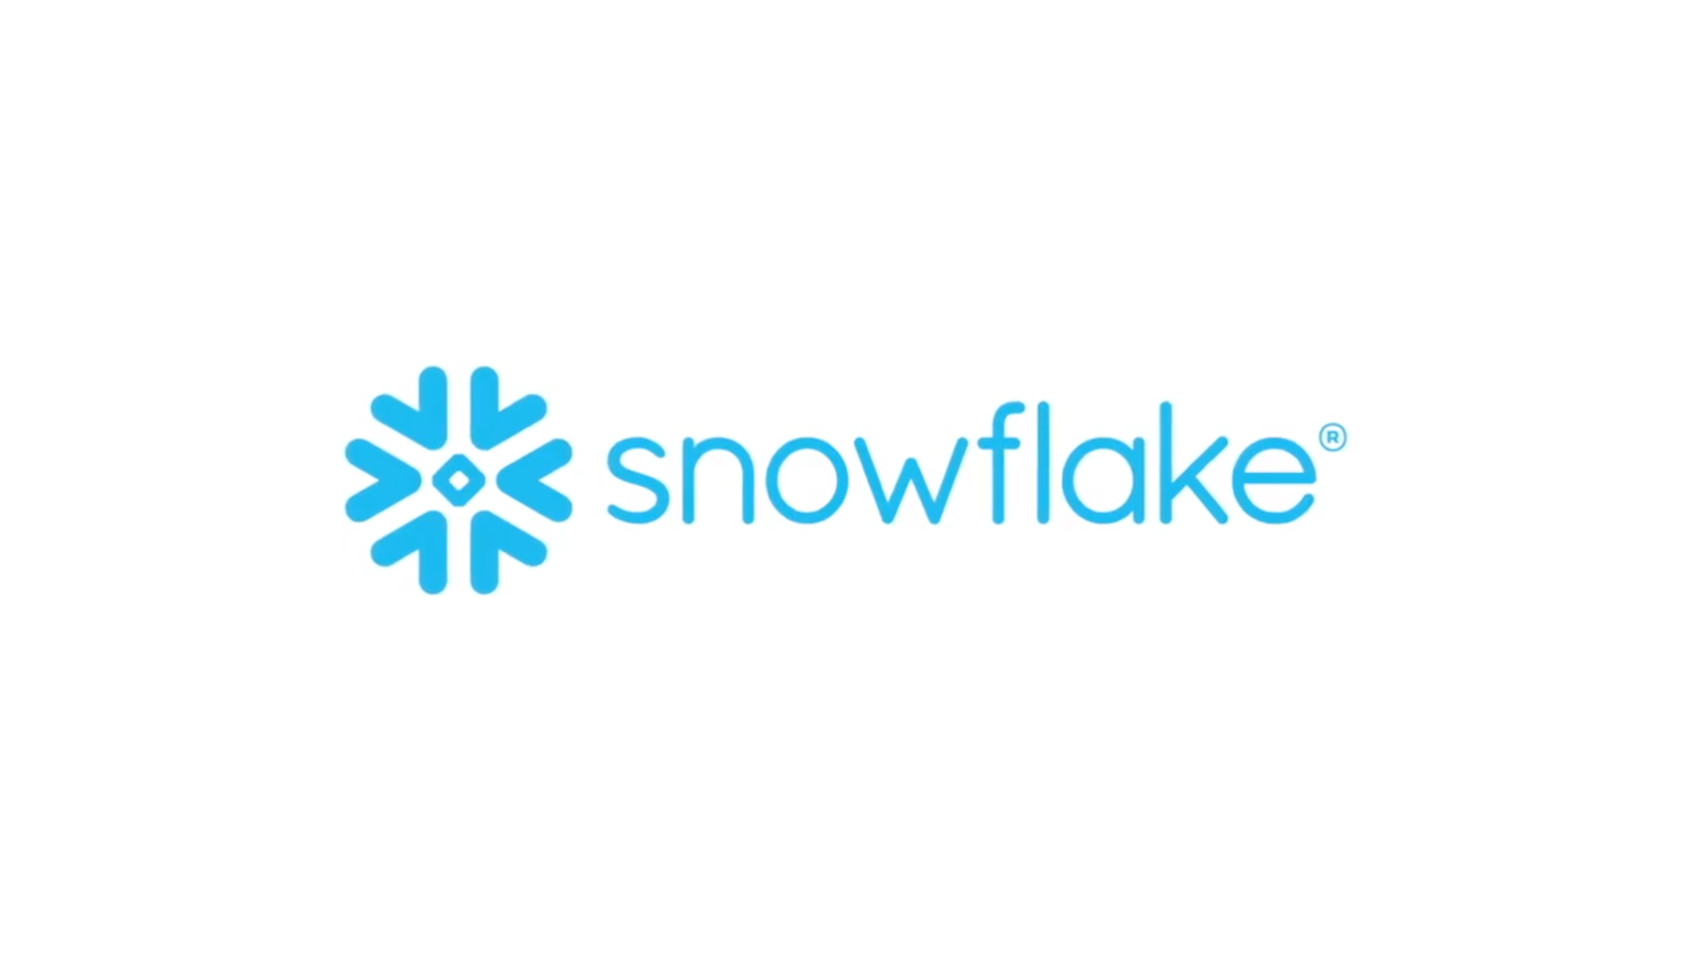 Snowflake Results Buoy Cloud Computing Stocks